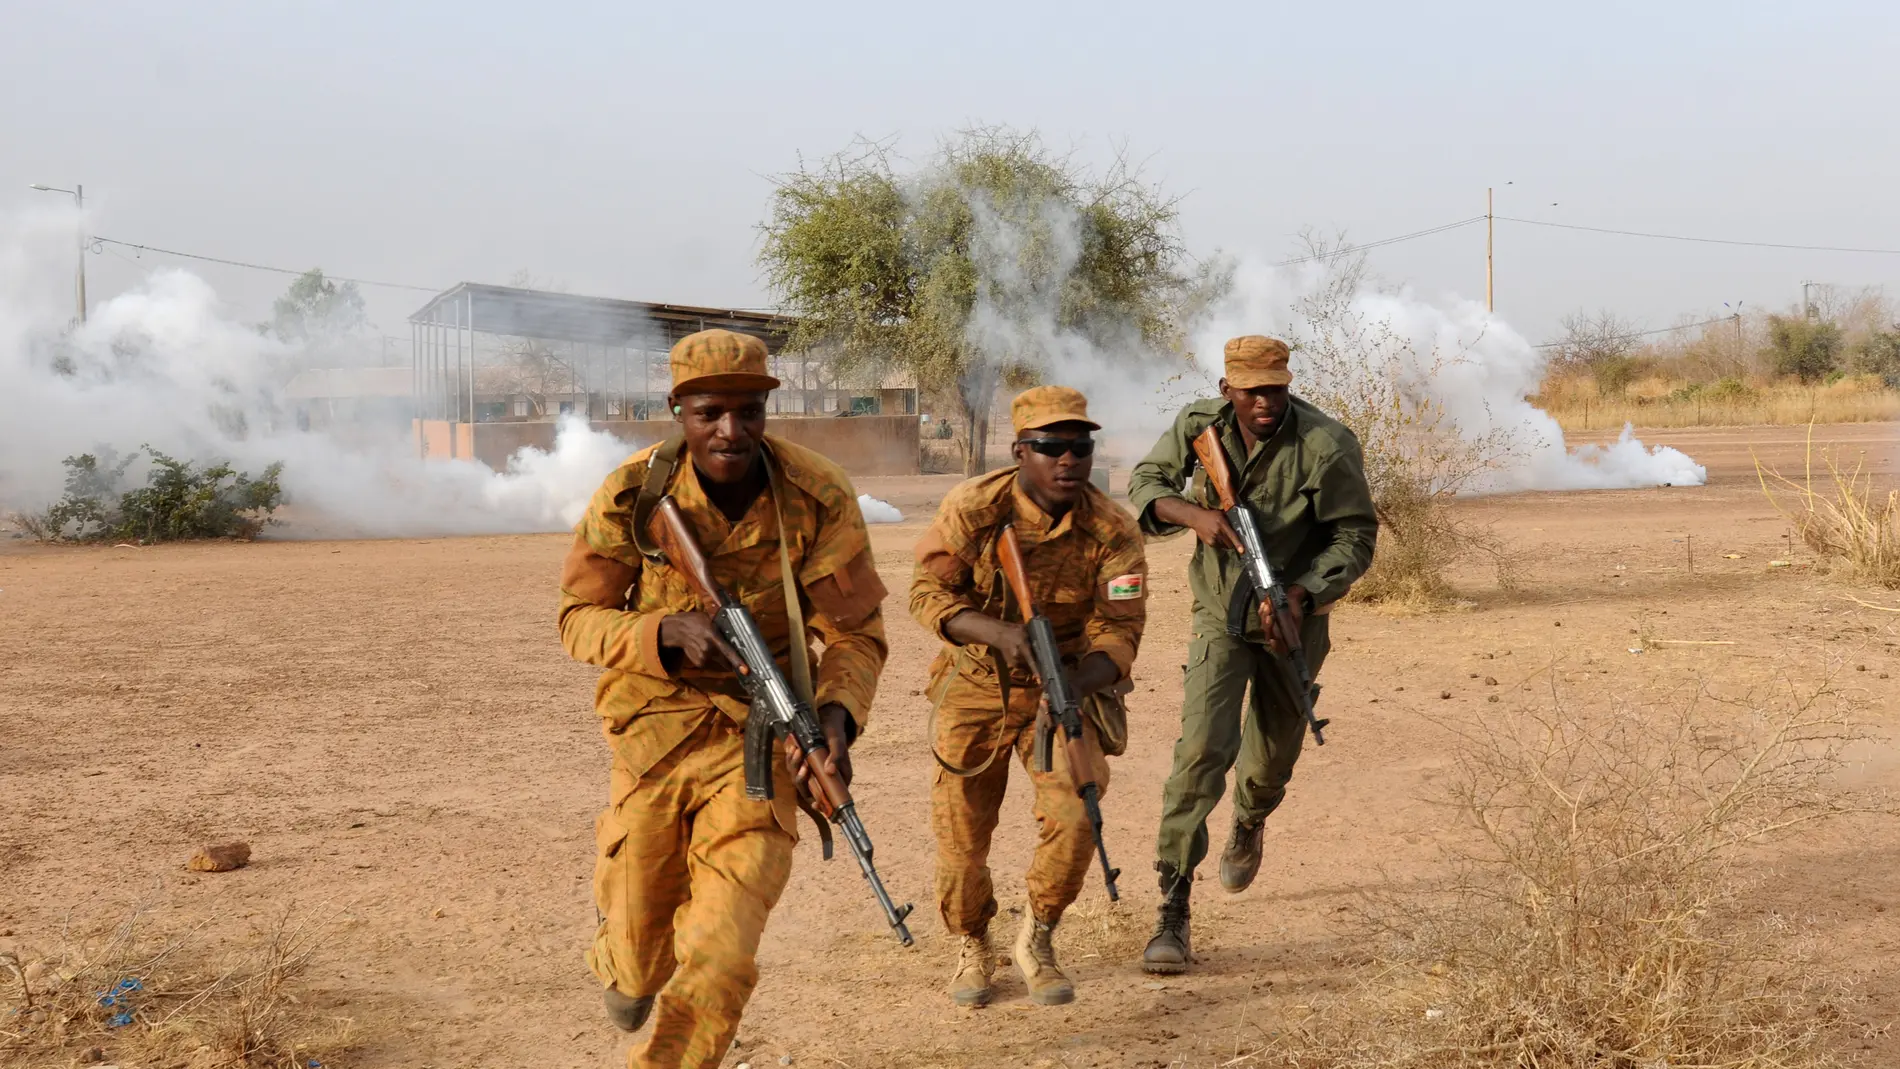 March 2, 2017 - Ouagadougou, Burkina Faso - Burkinabe soldiers utilize smoke cover to regroup after an ambush exercise at Camp Zagre March 2, 2017 in Ouagadougou, Burkina Faso. (Foto de ARCHIVO) 02/03/2017